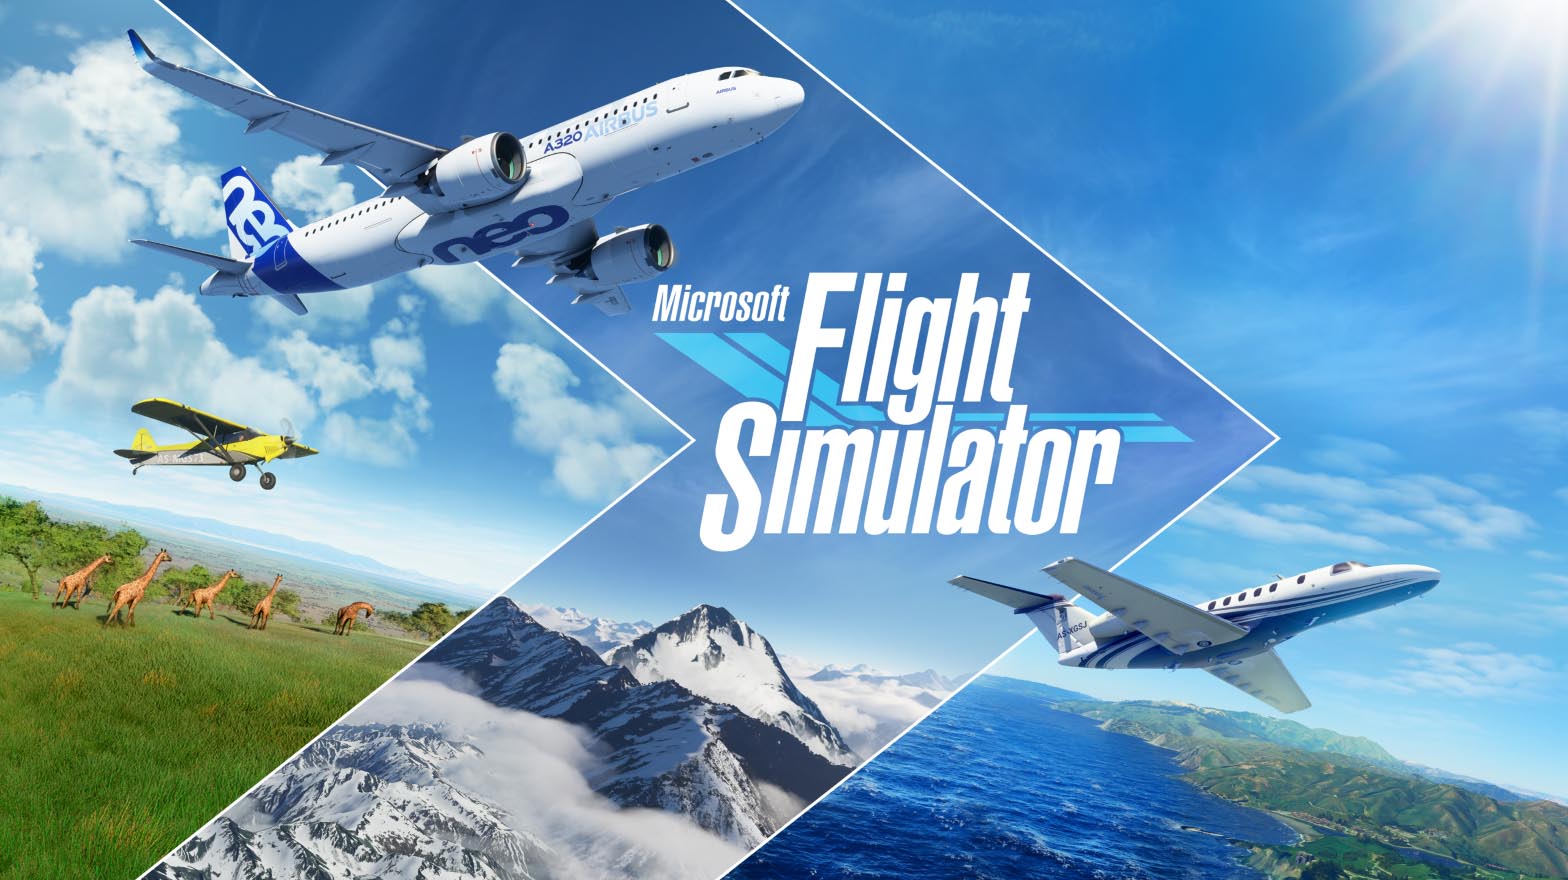 Microsoft Flight Simulator game art